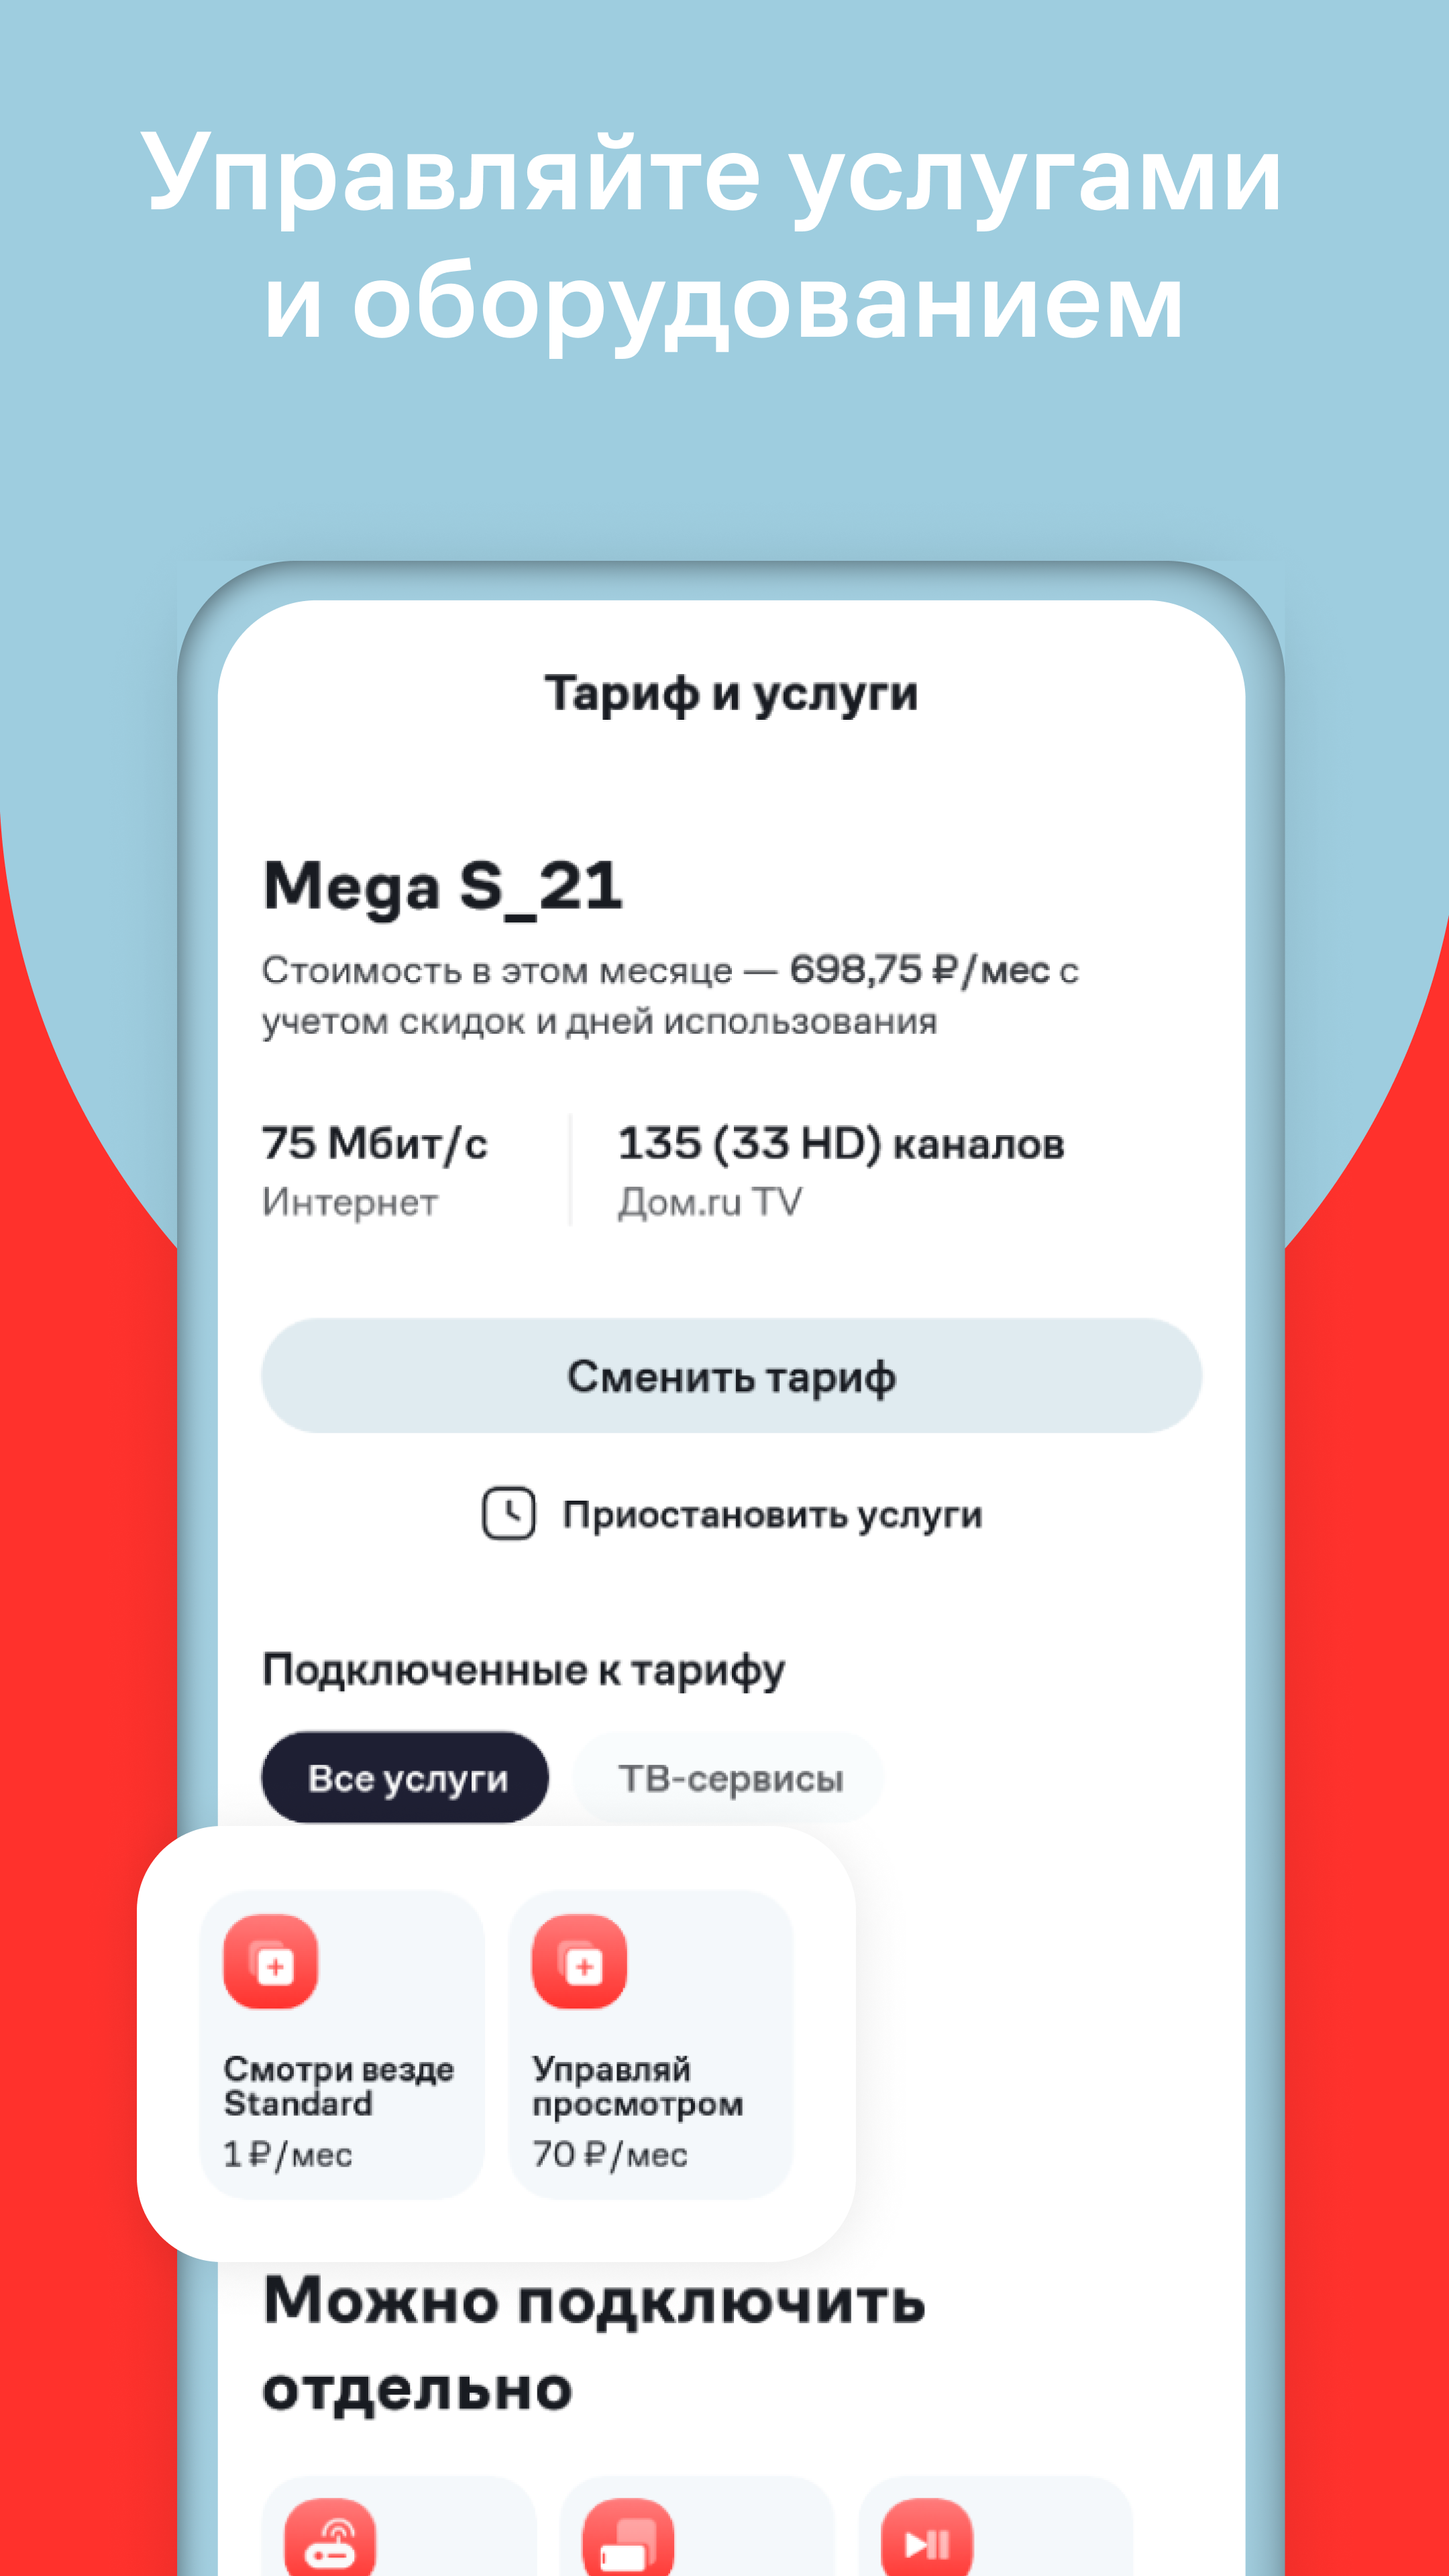 Android application Мой Дом.ру screenshort